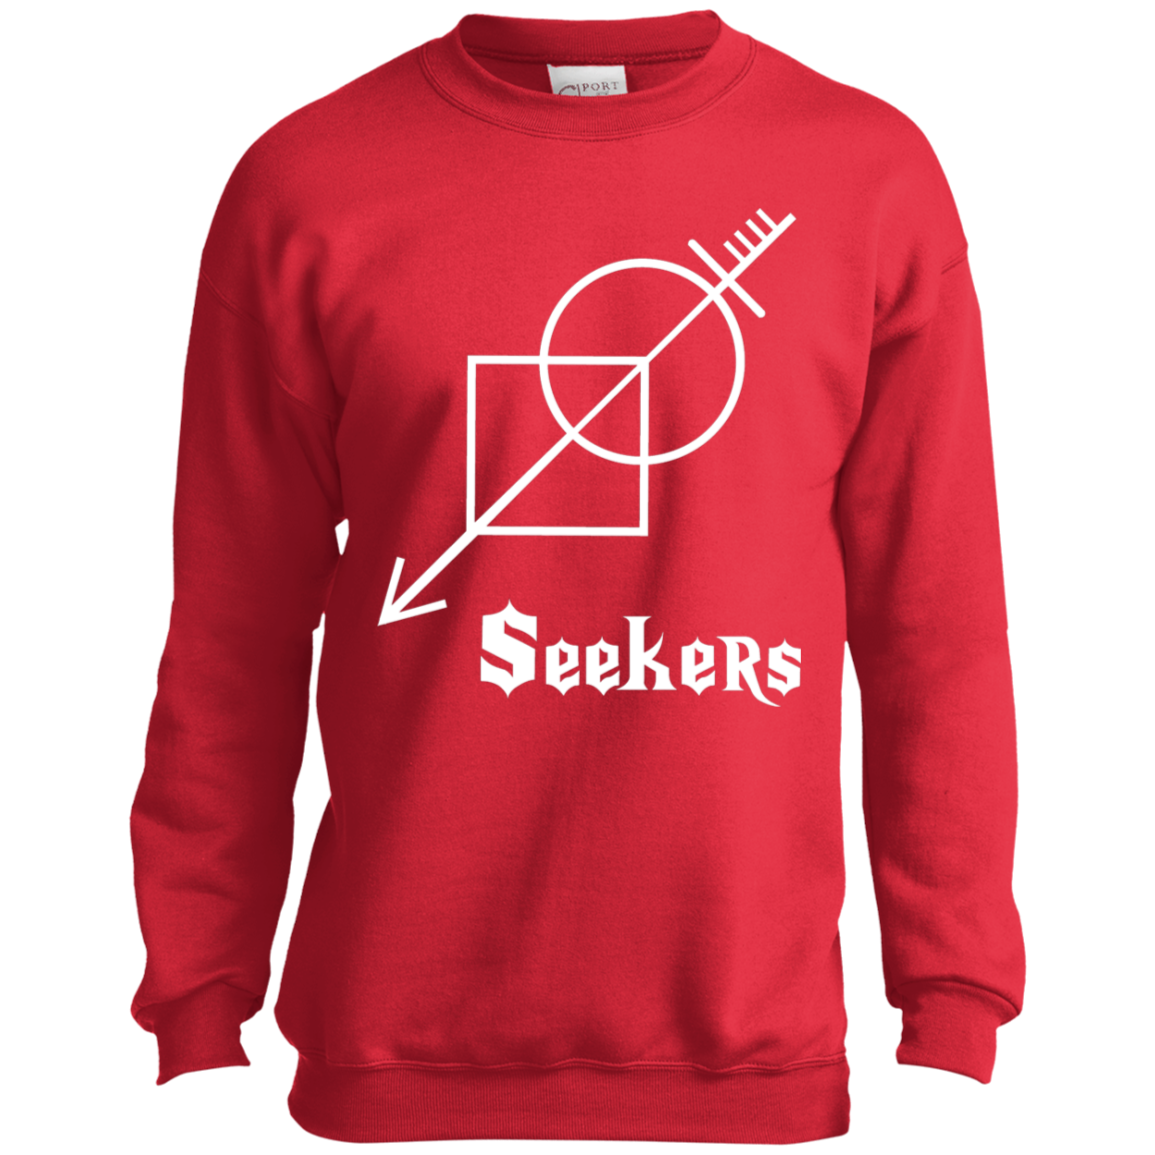 Seekers-Port and Co. Youth Crewneck Sweatshirt-men's